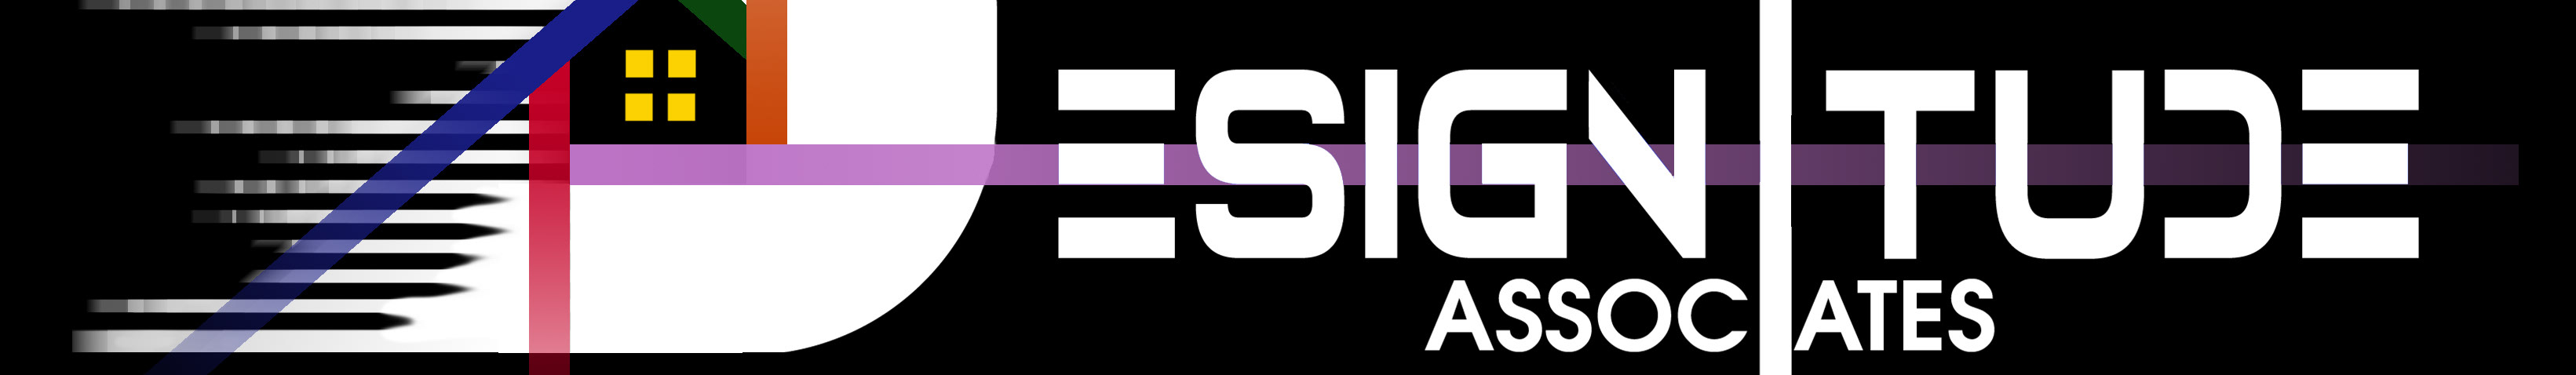 Designitude Associates's profile banner